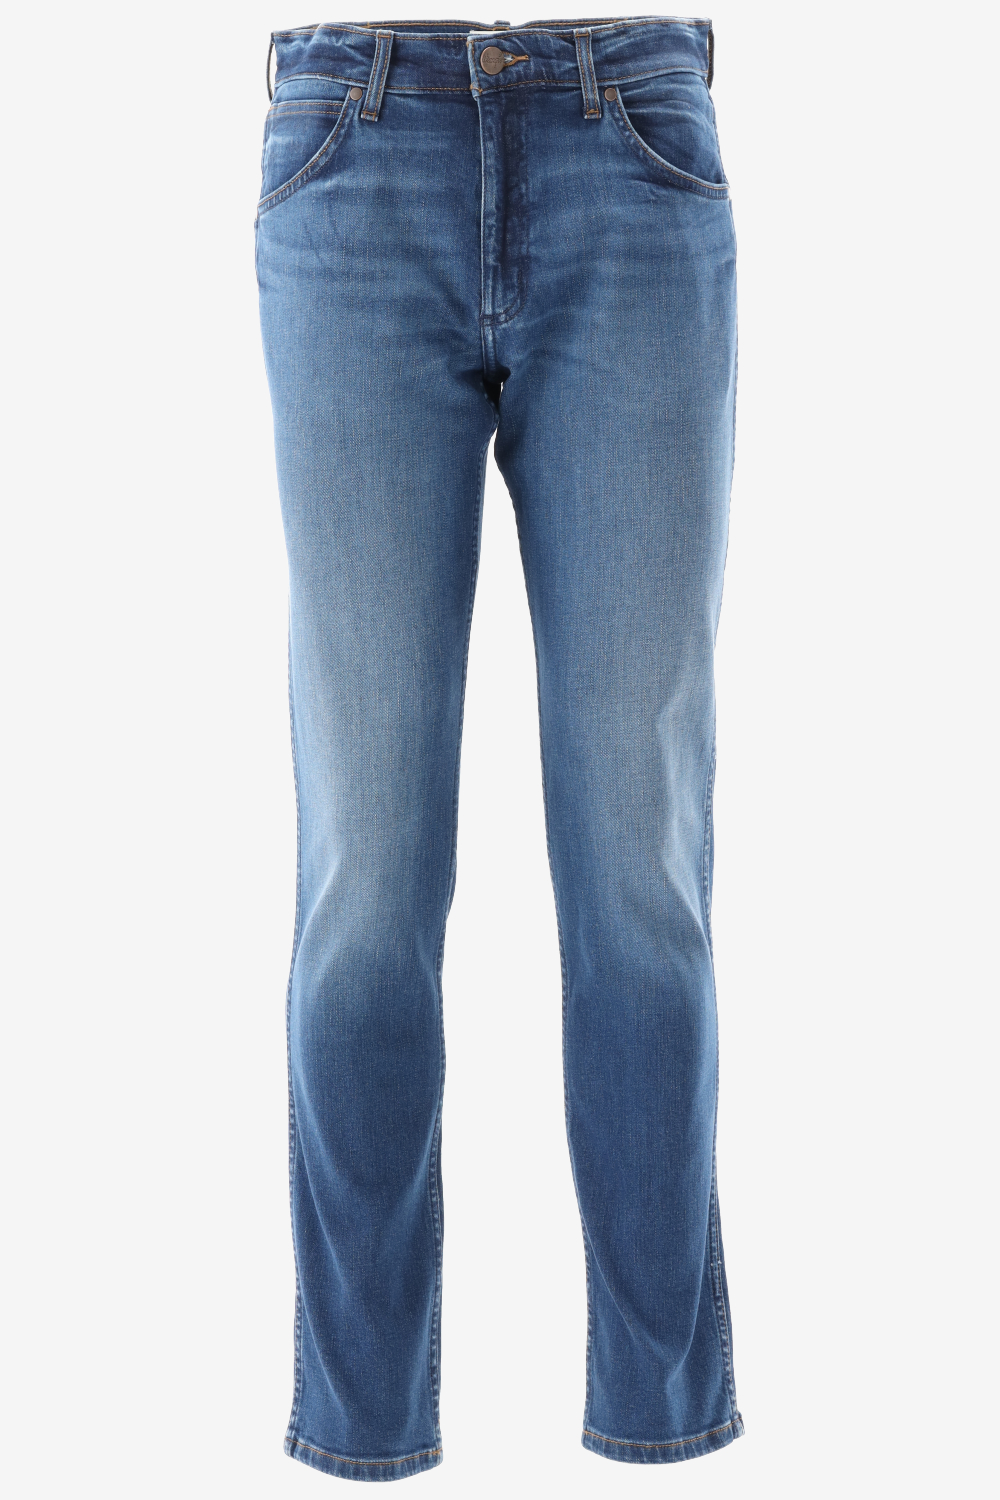 Wrangler Jeans Greensboro -modern Fit - Blauw - 34-36